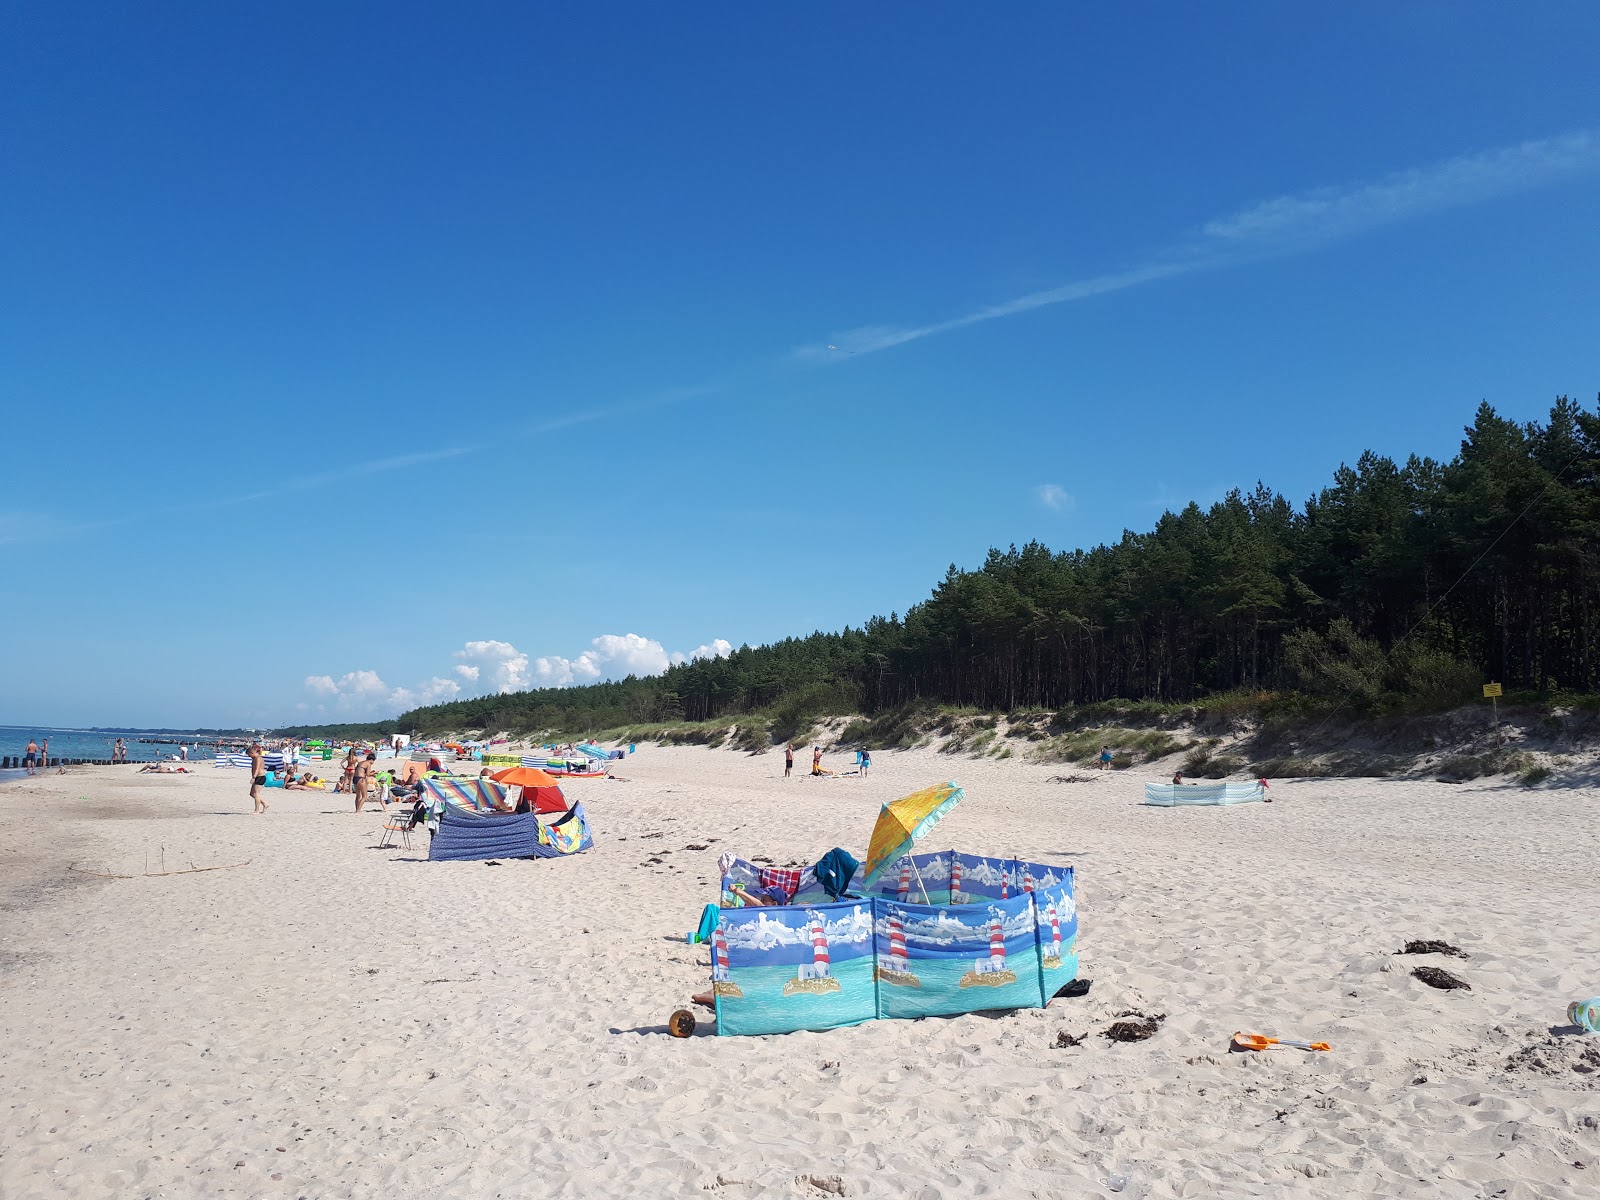 Foto av Mielenko beach med hög nivå av renlighet